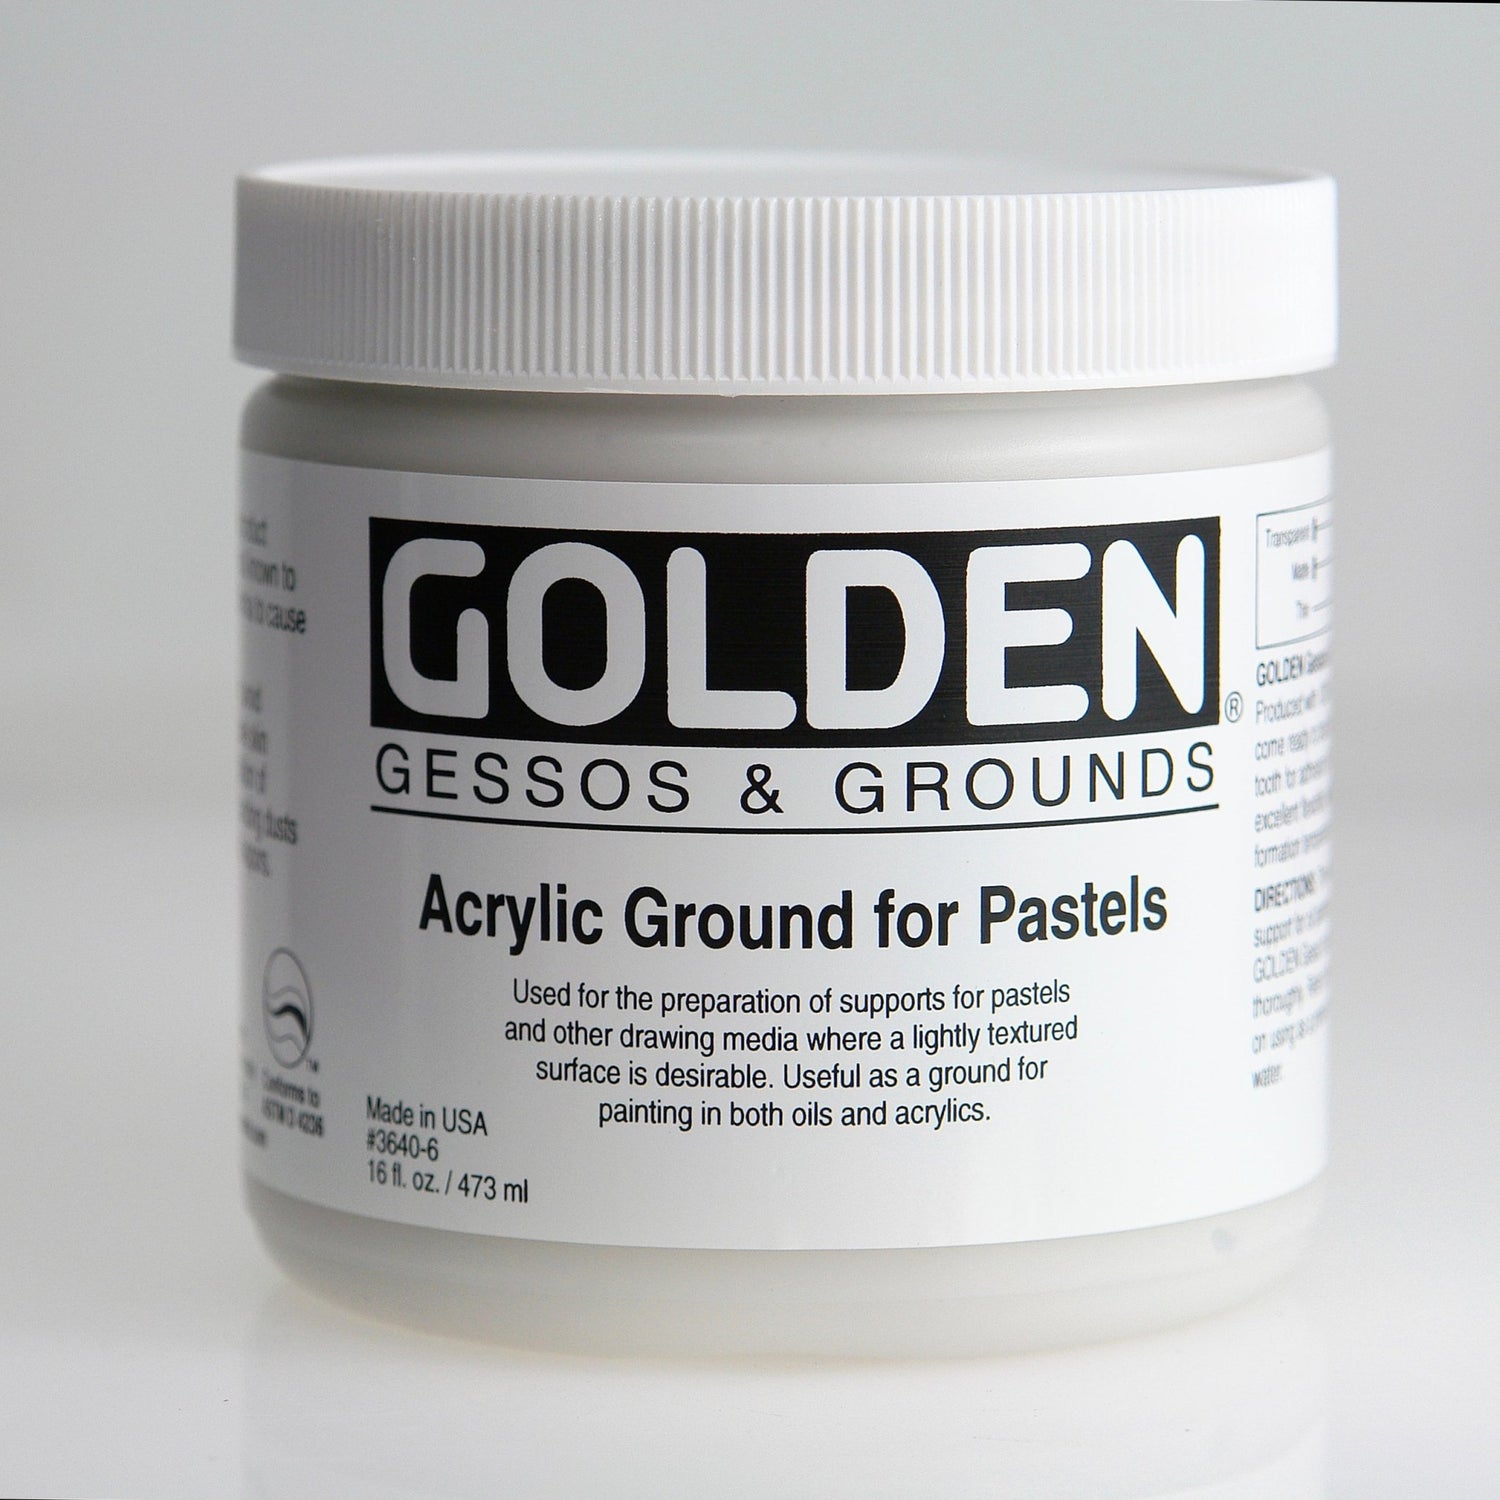 Golden Acrylic Ground for Pastels 473ml - theartshop.com.au